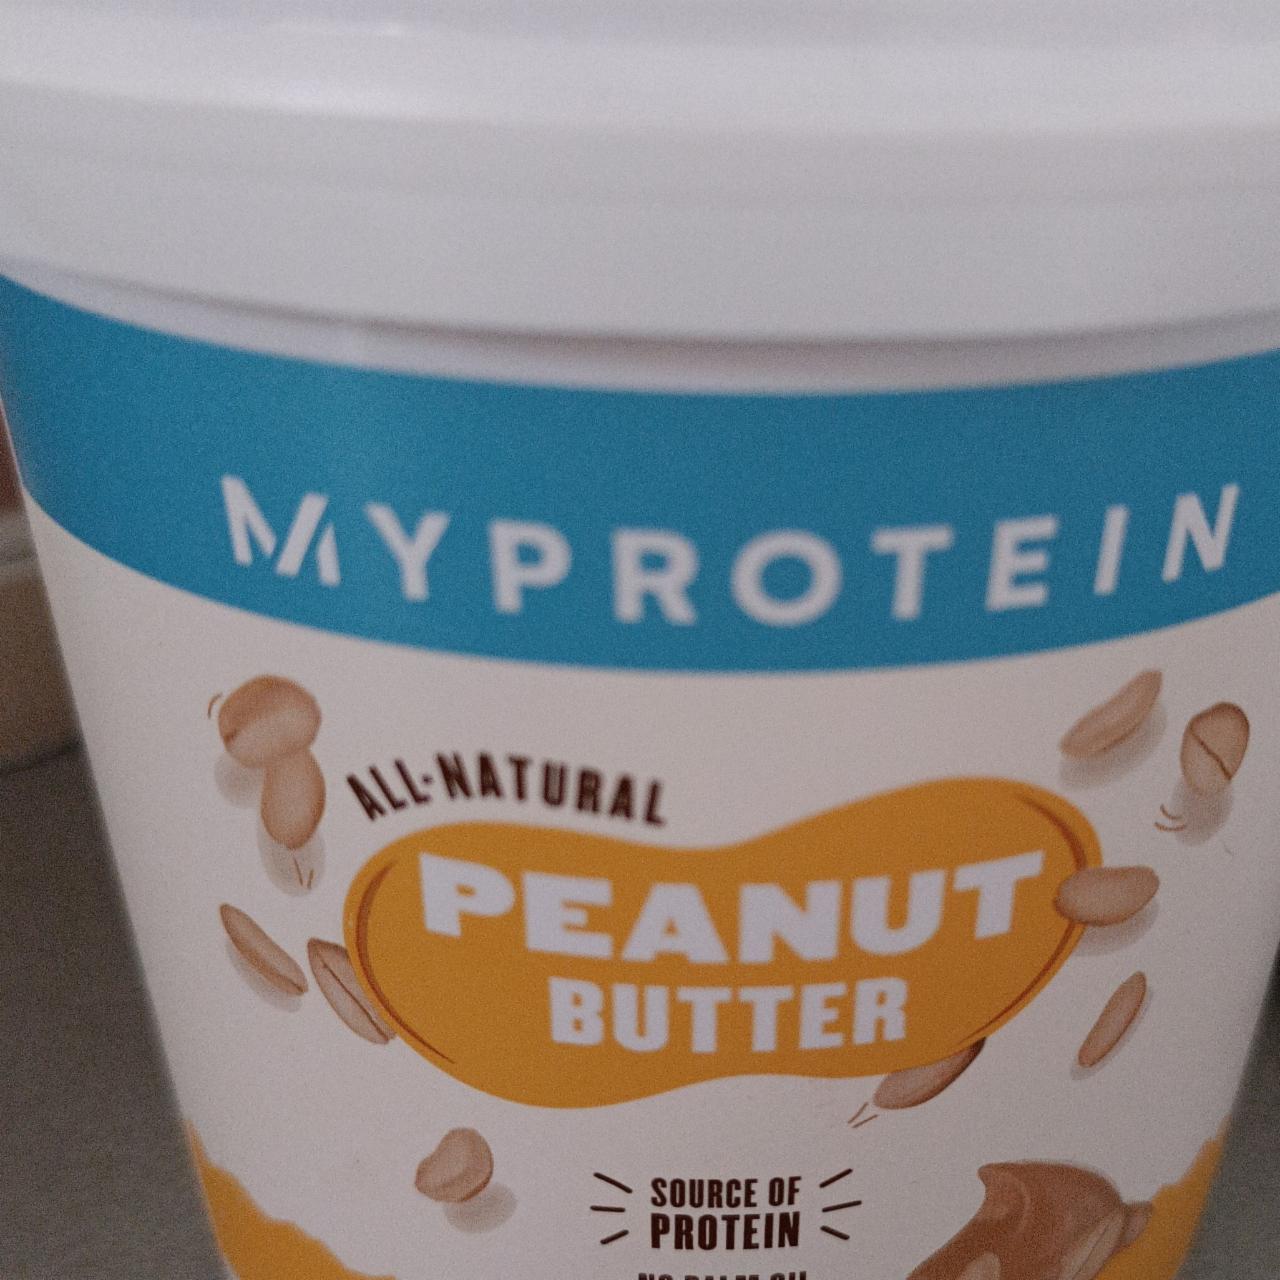 Képek - My protein peanut butter all-natural